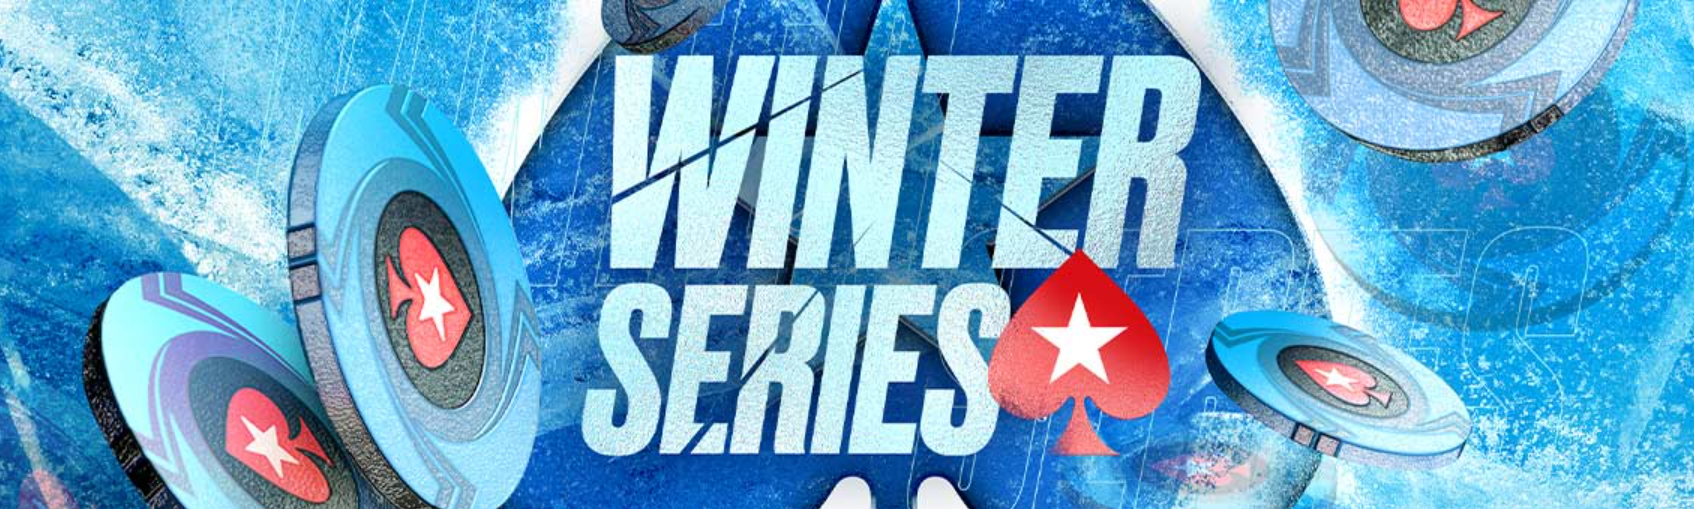 Winter Series Among Highlights of Year-End Weekend on PokerStars Ontario